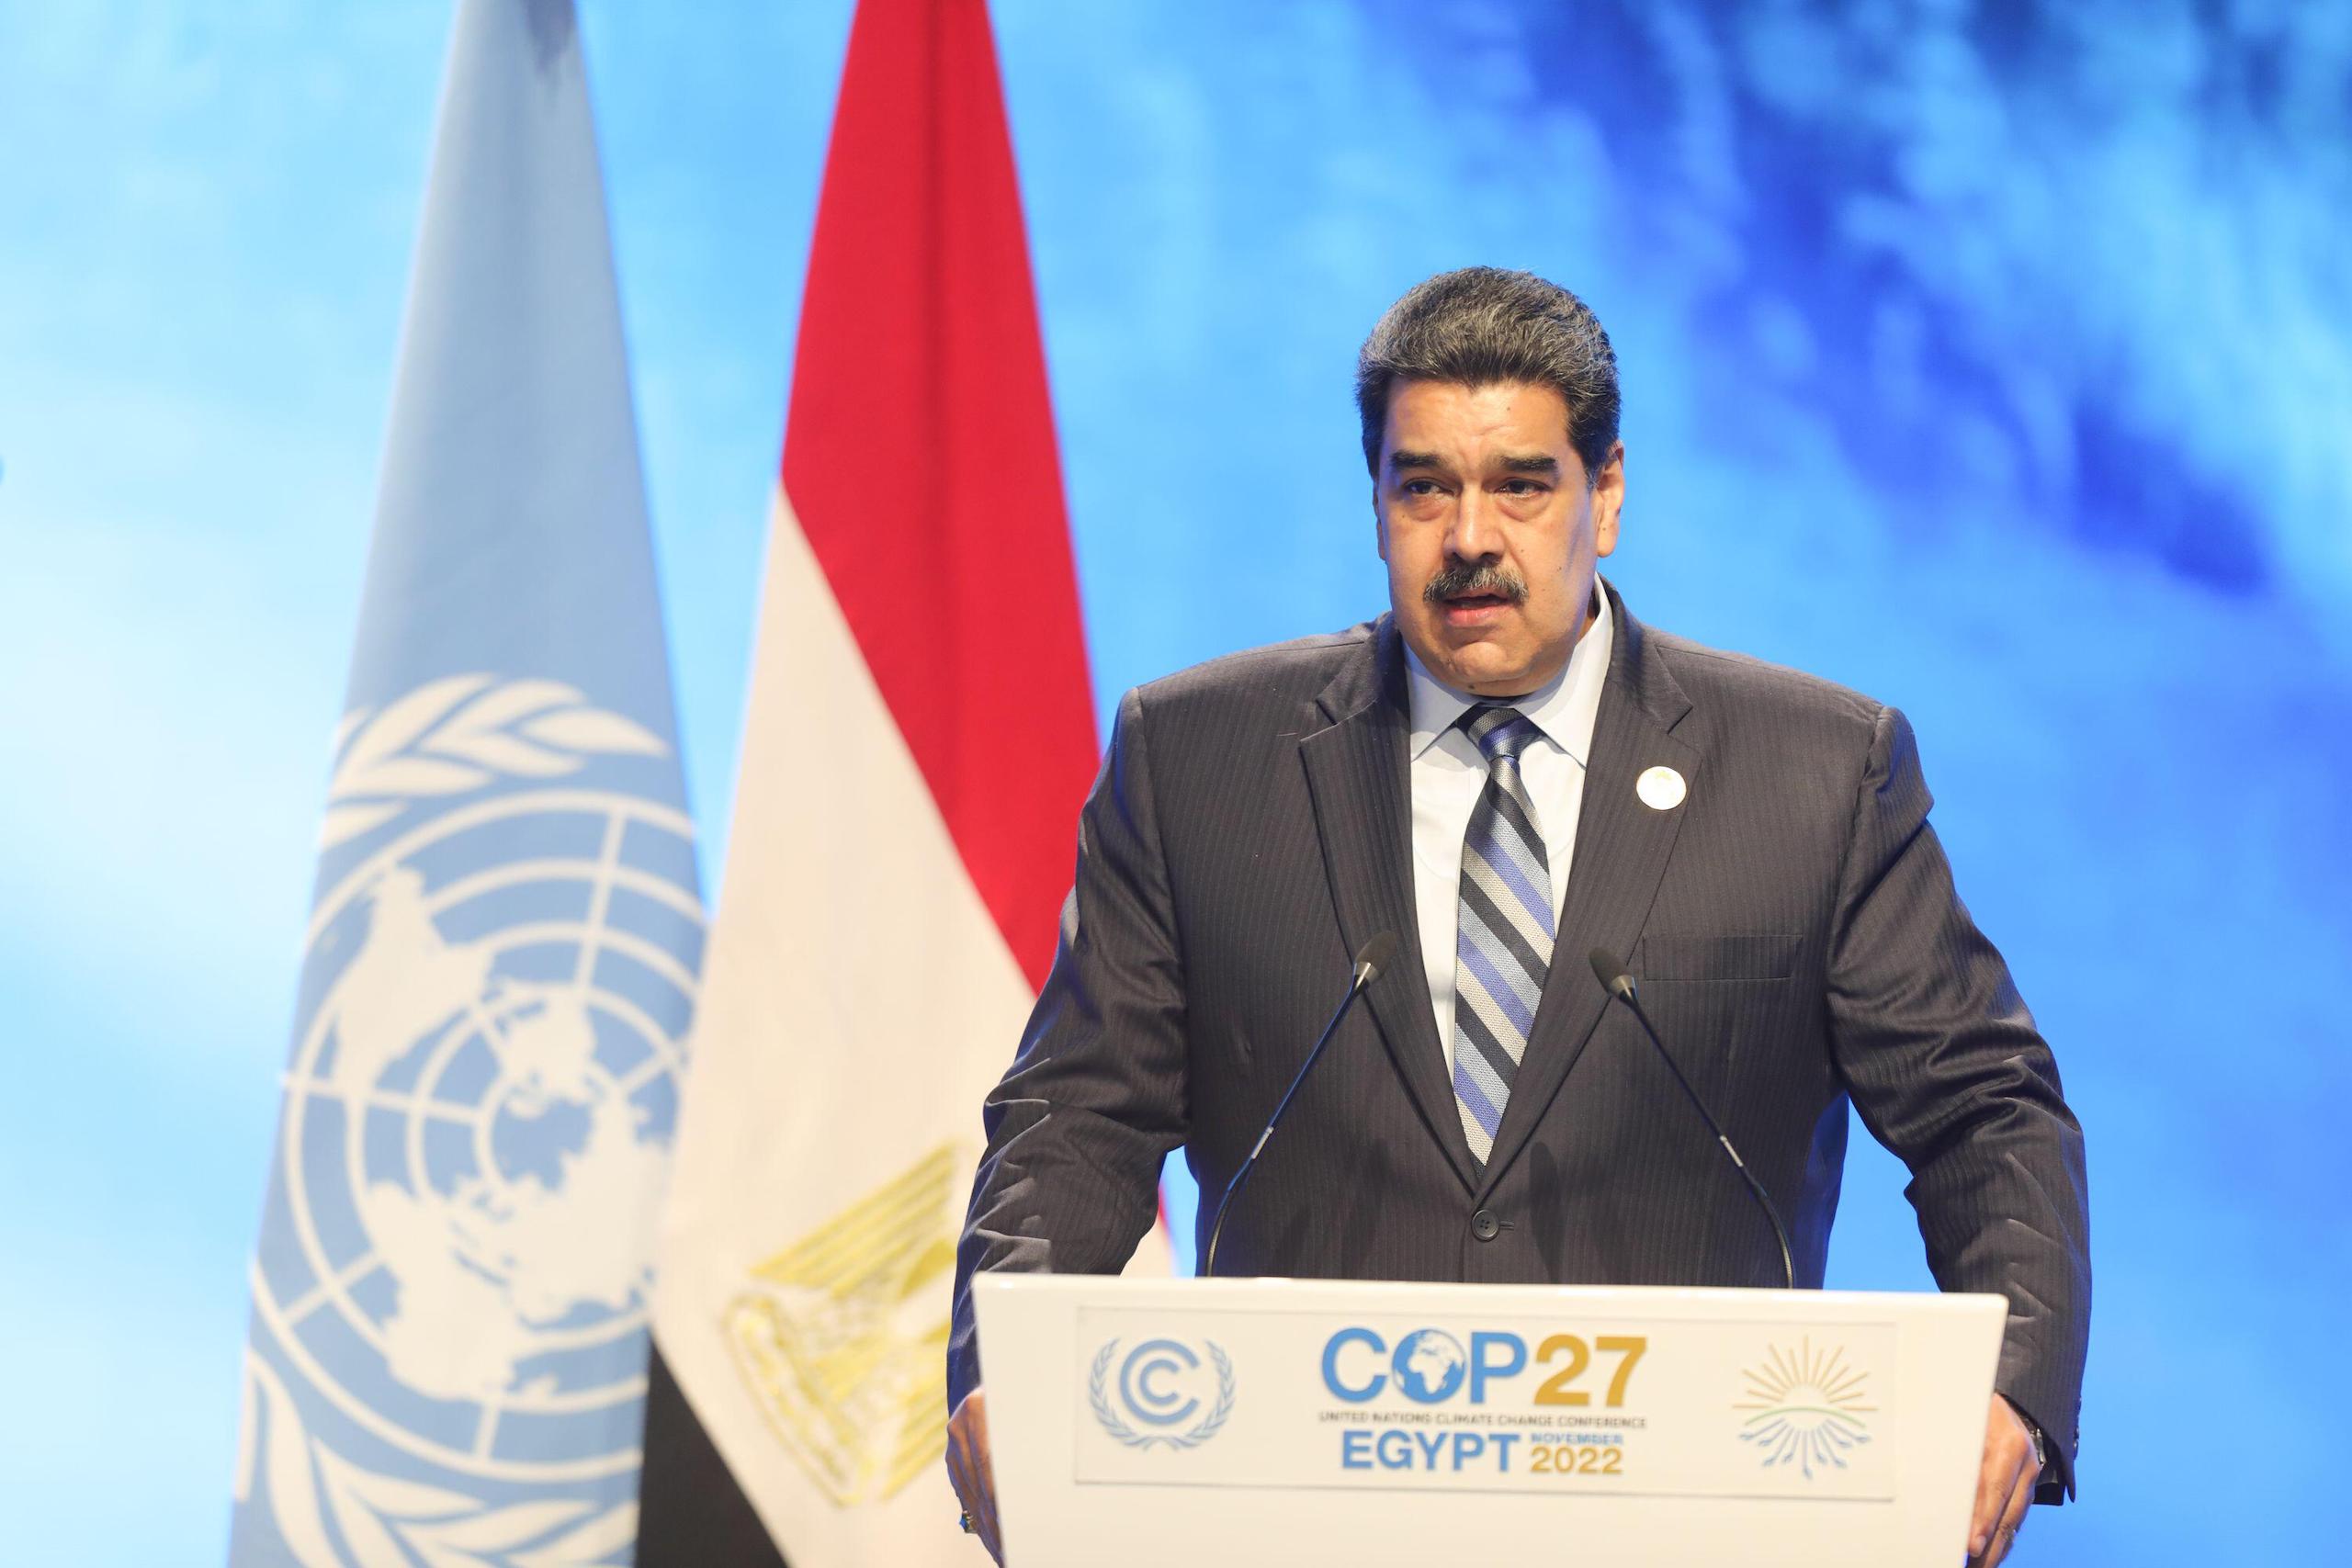 Venezuelan President Nicolas Maduro delivers a speech on COP27